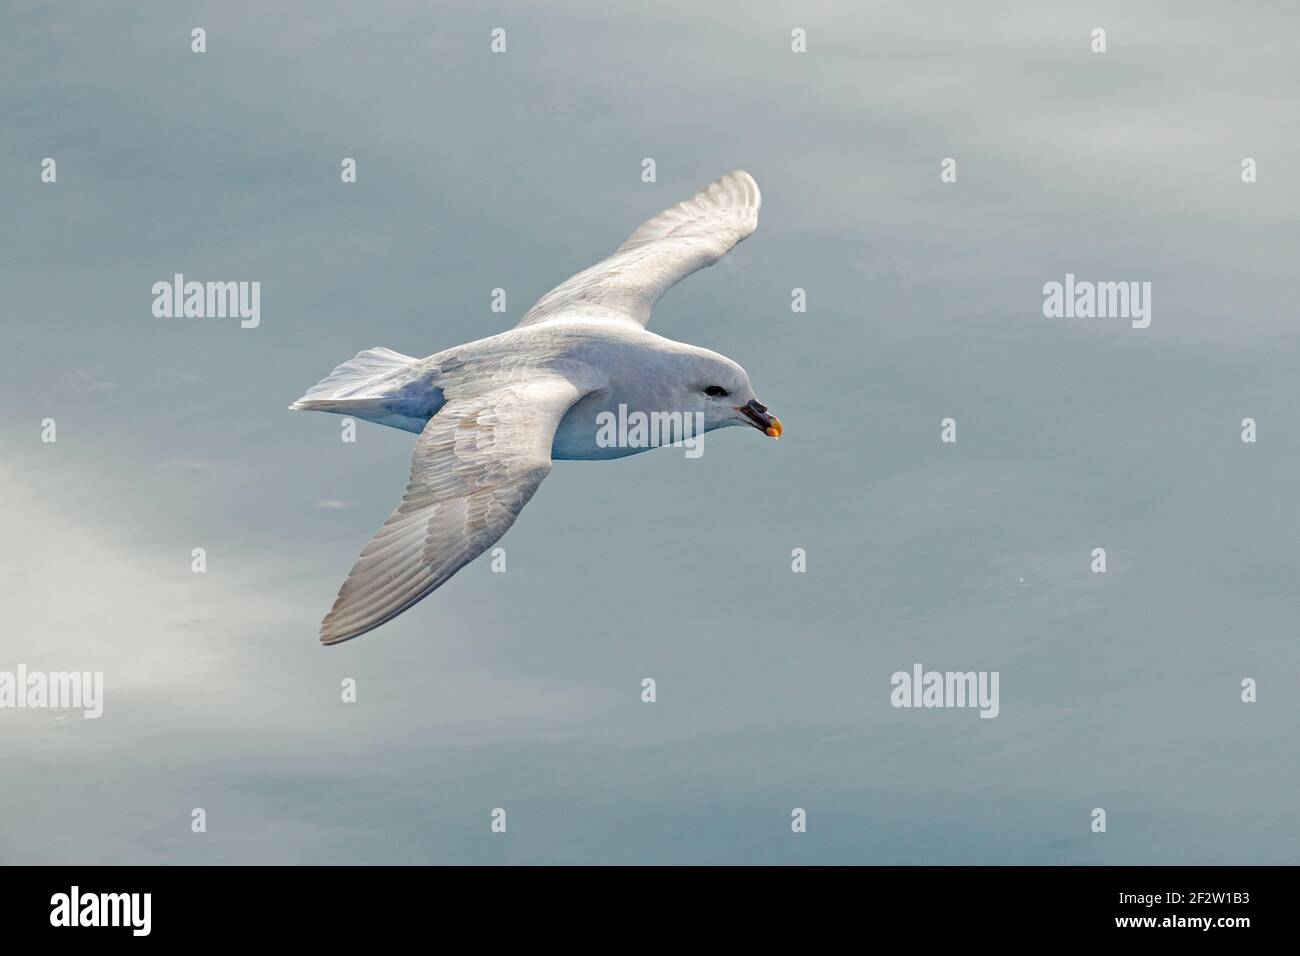 Flying bird. Fulmar in fly. Northern Fulmar, Fulmarus glacialis, white bird, blue water, dark blue ice in the background, animal flight Arctic nature Stock Photo